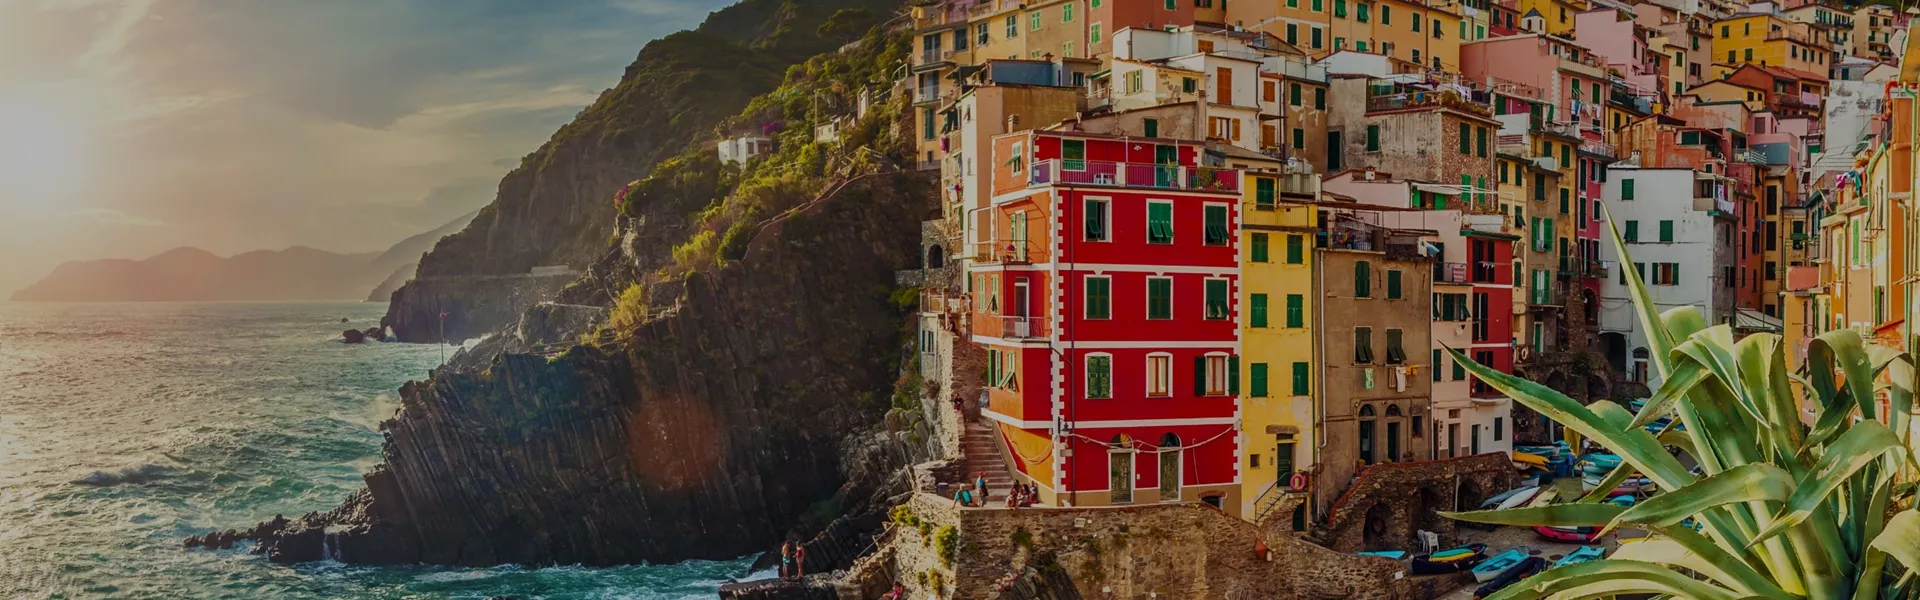 A colourful Italian city by the sea